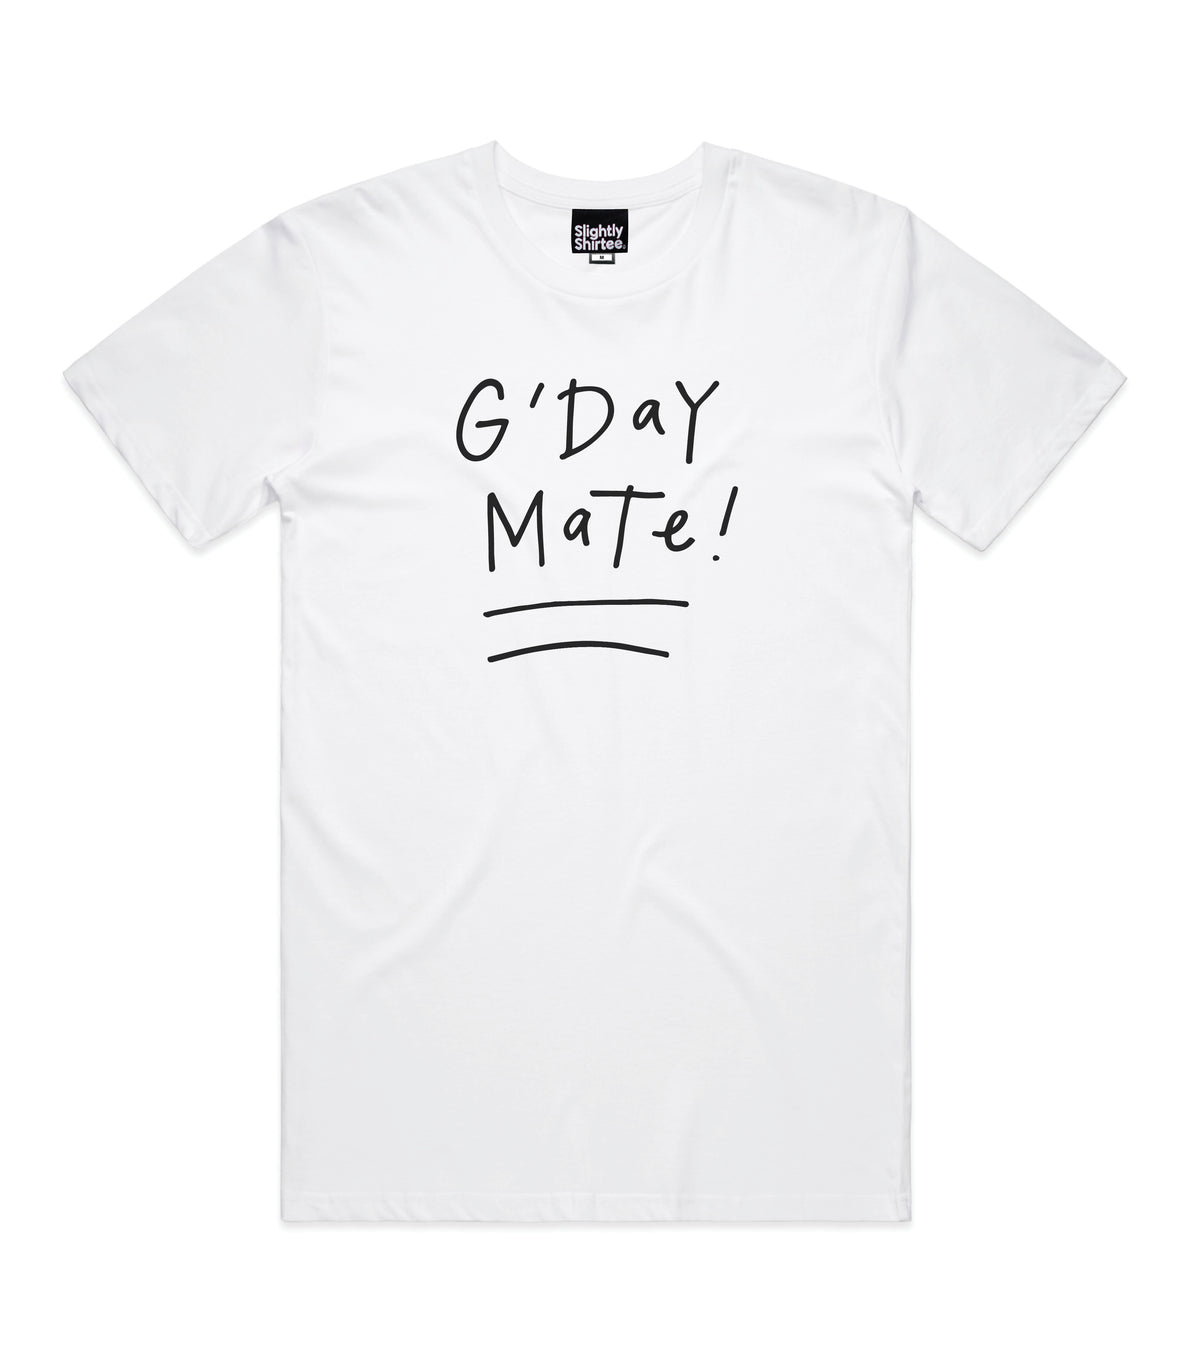 G'day Mate tee (Men's) - White